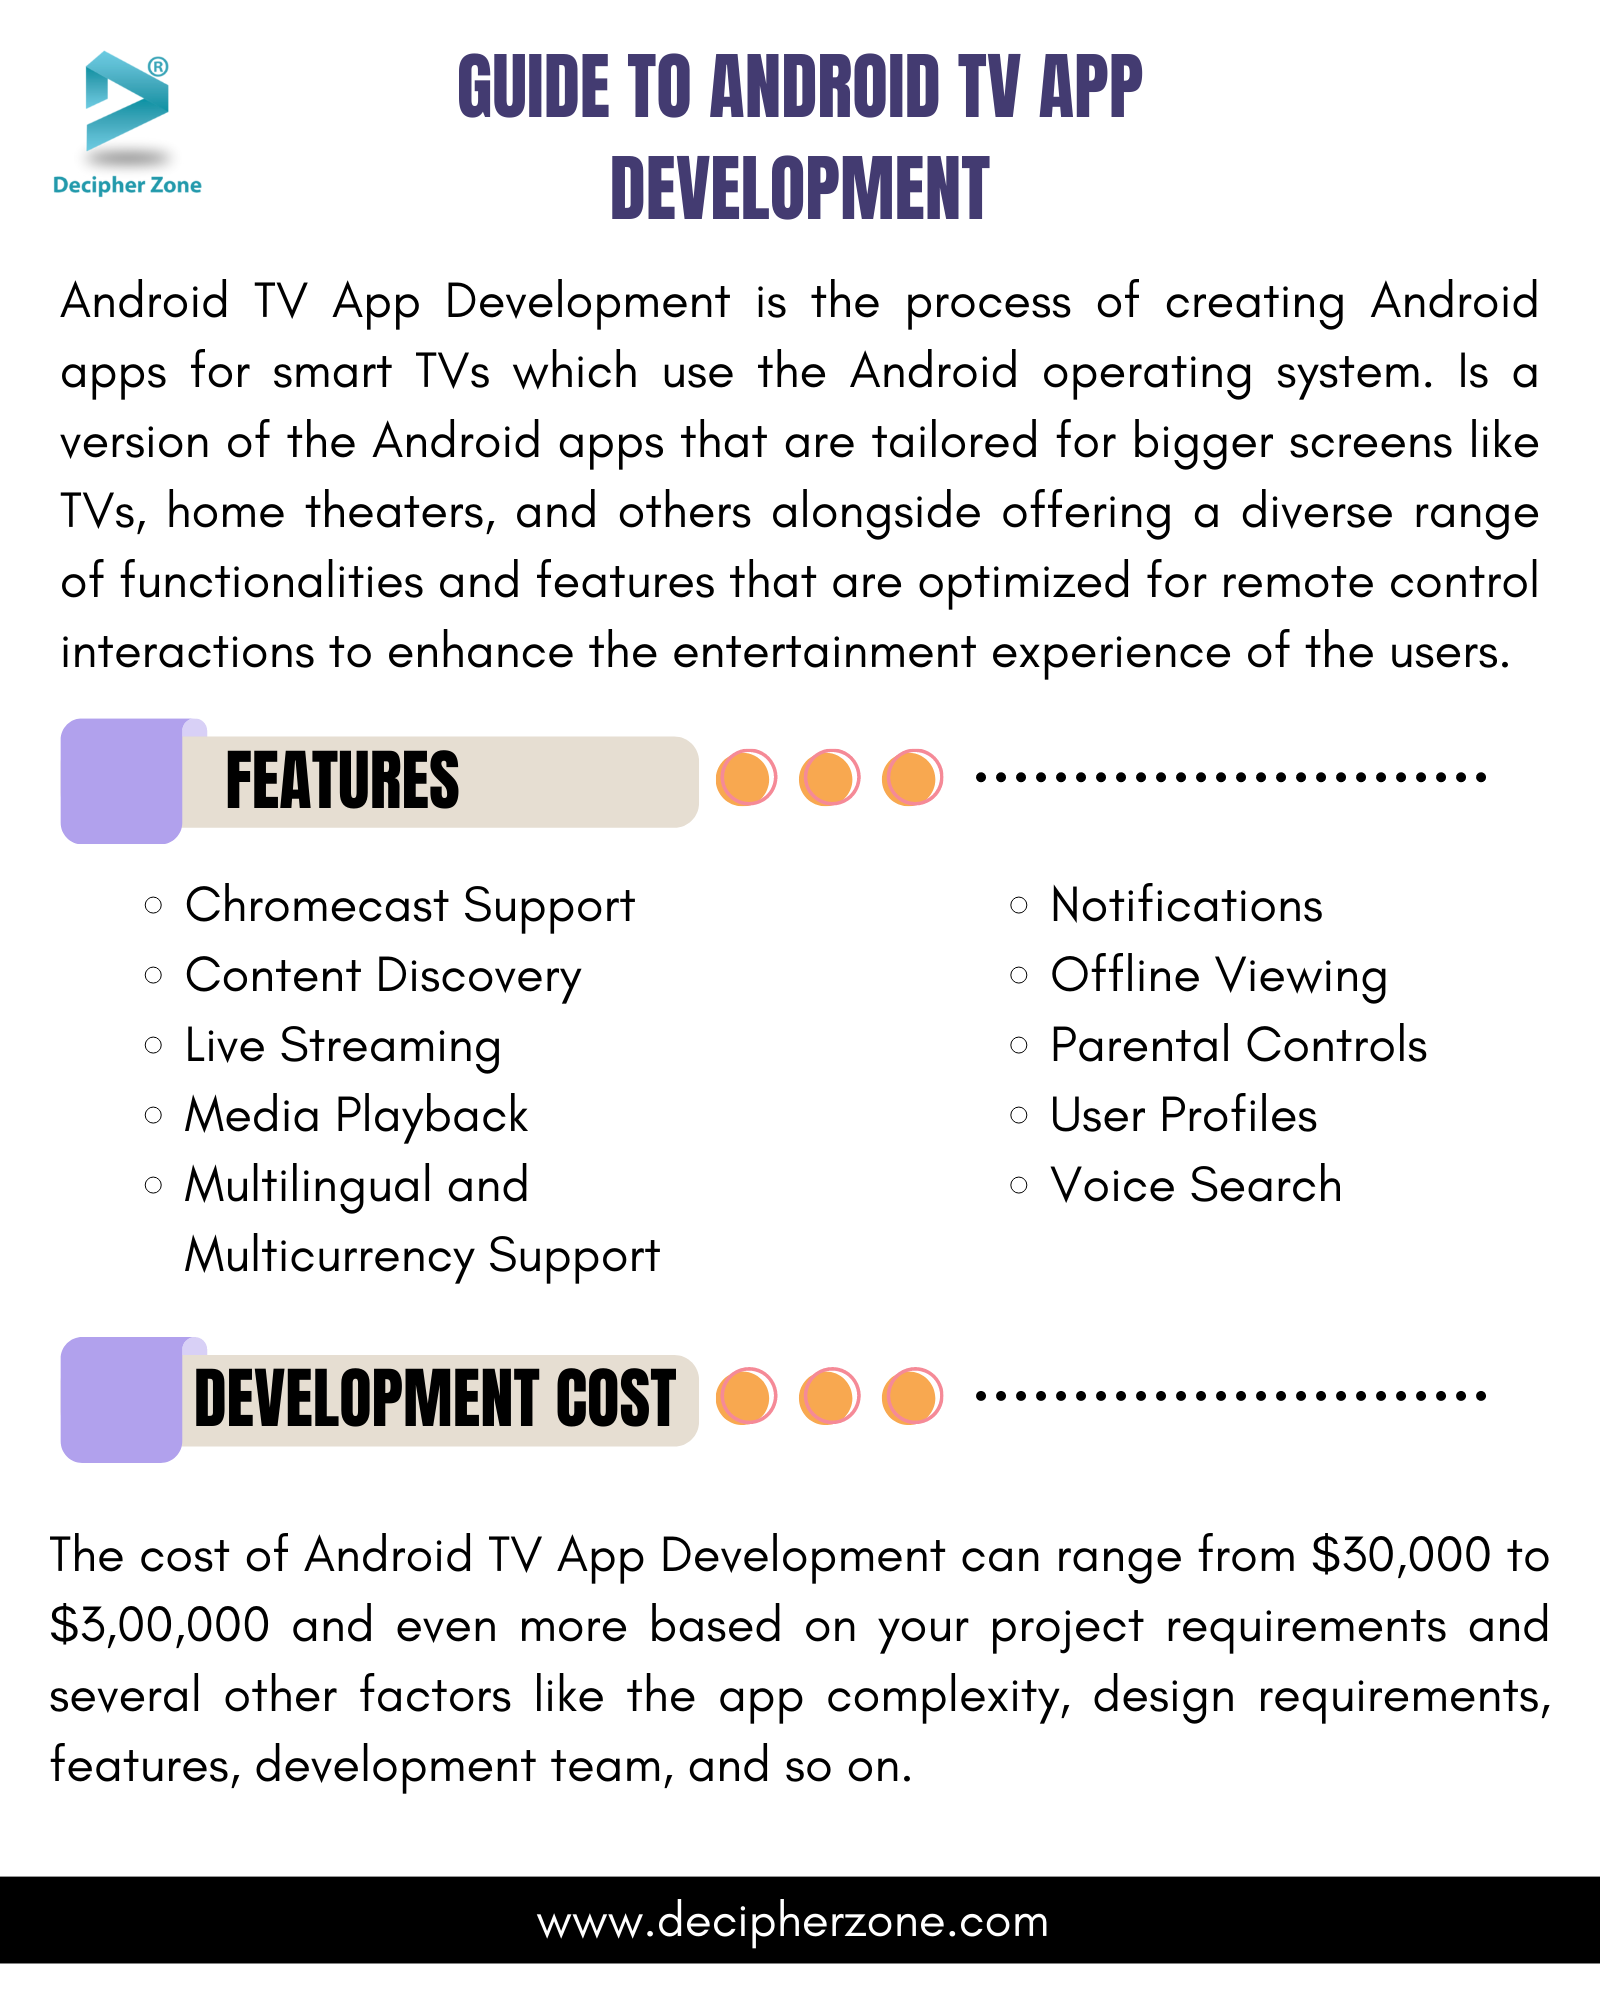  Android TV App Development